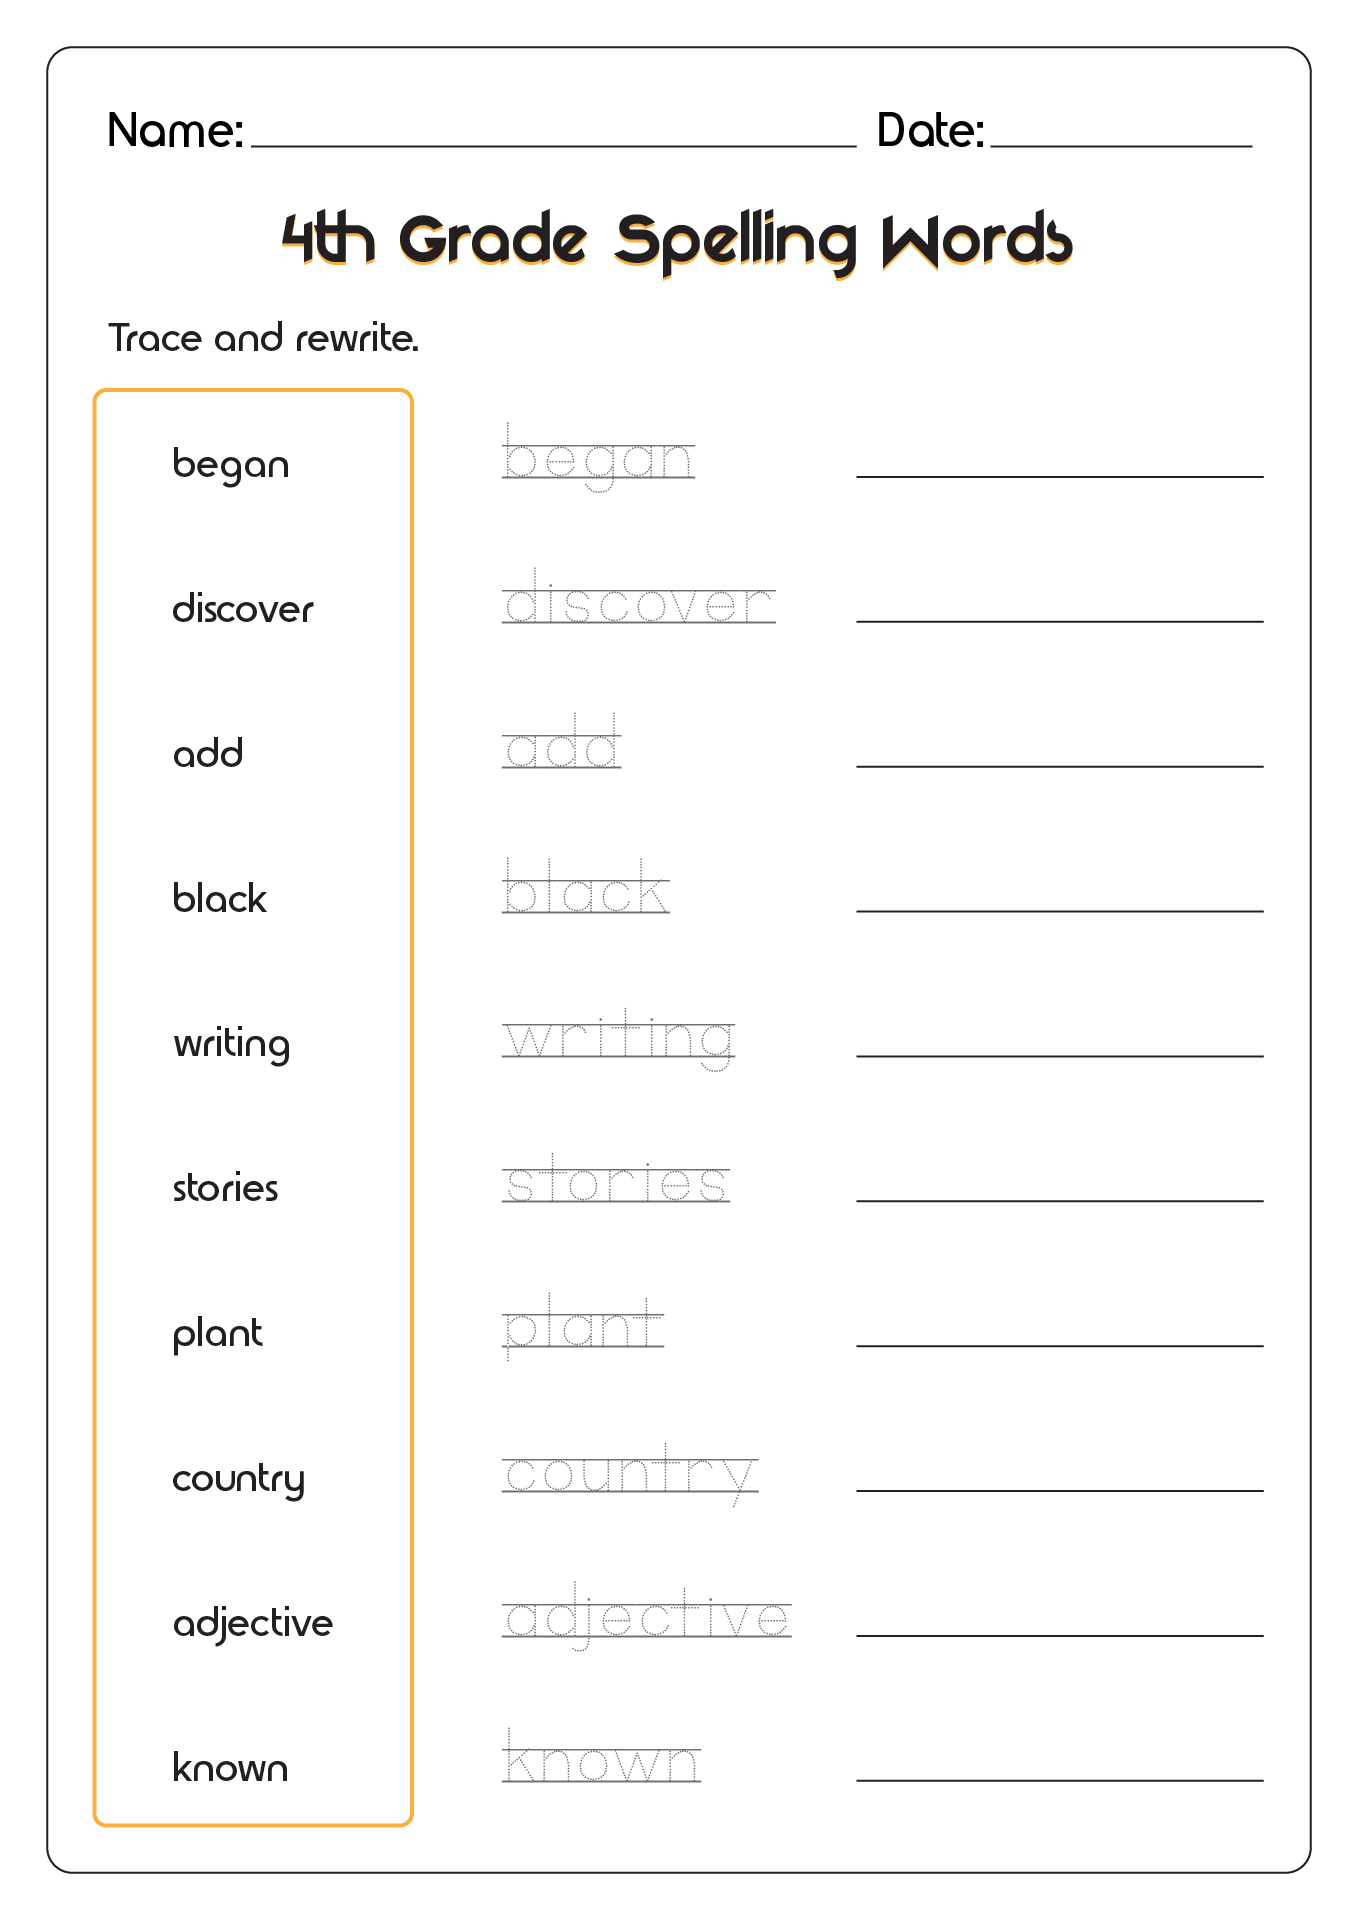 13-best-images-of-spelling-list-worksheets-4th-grade-spelling-word